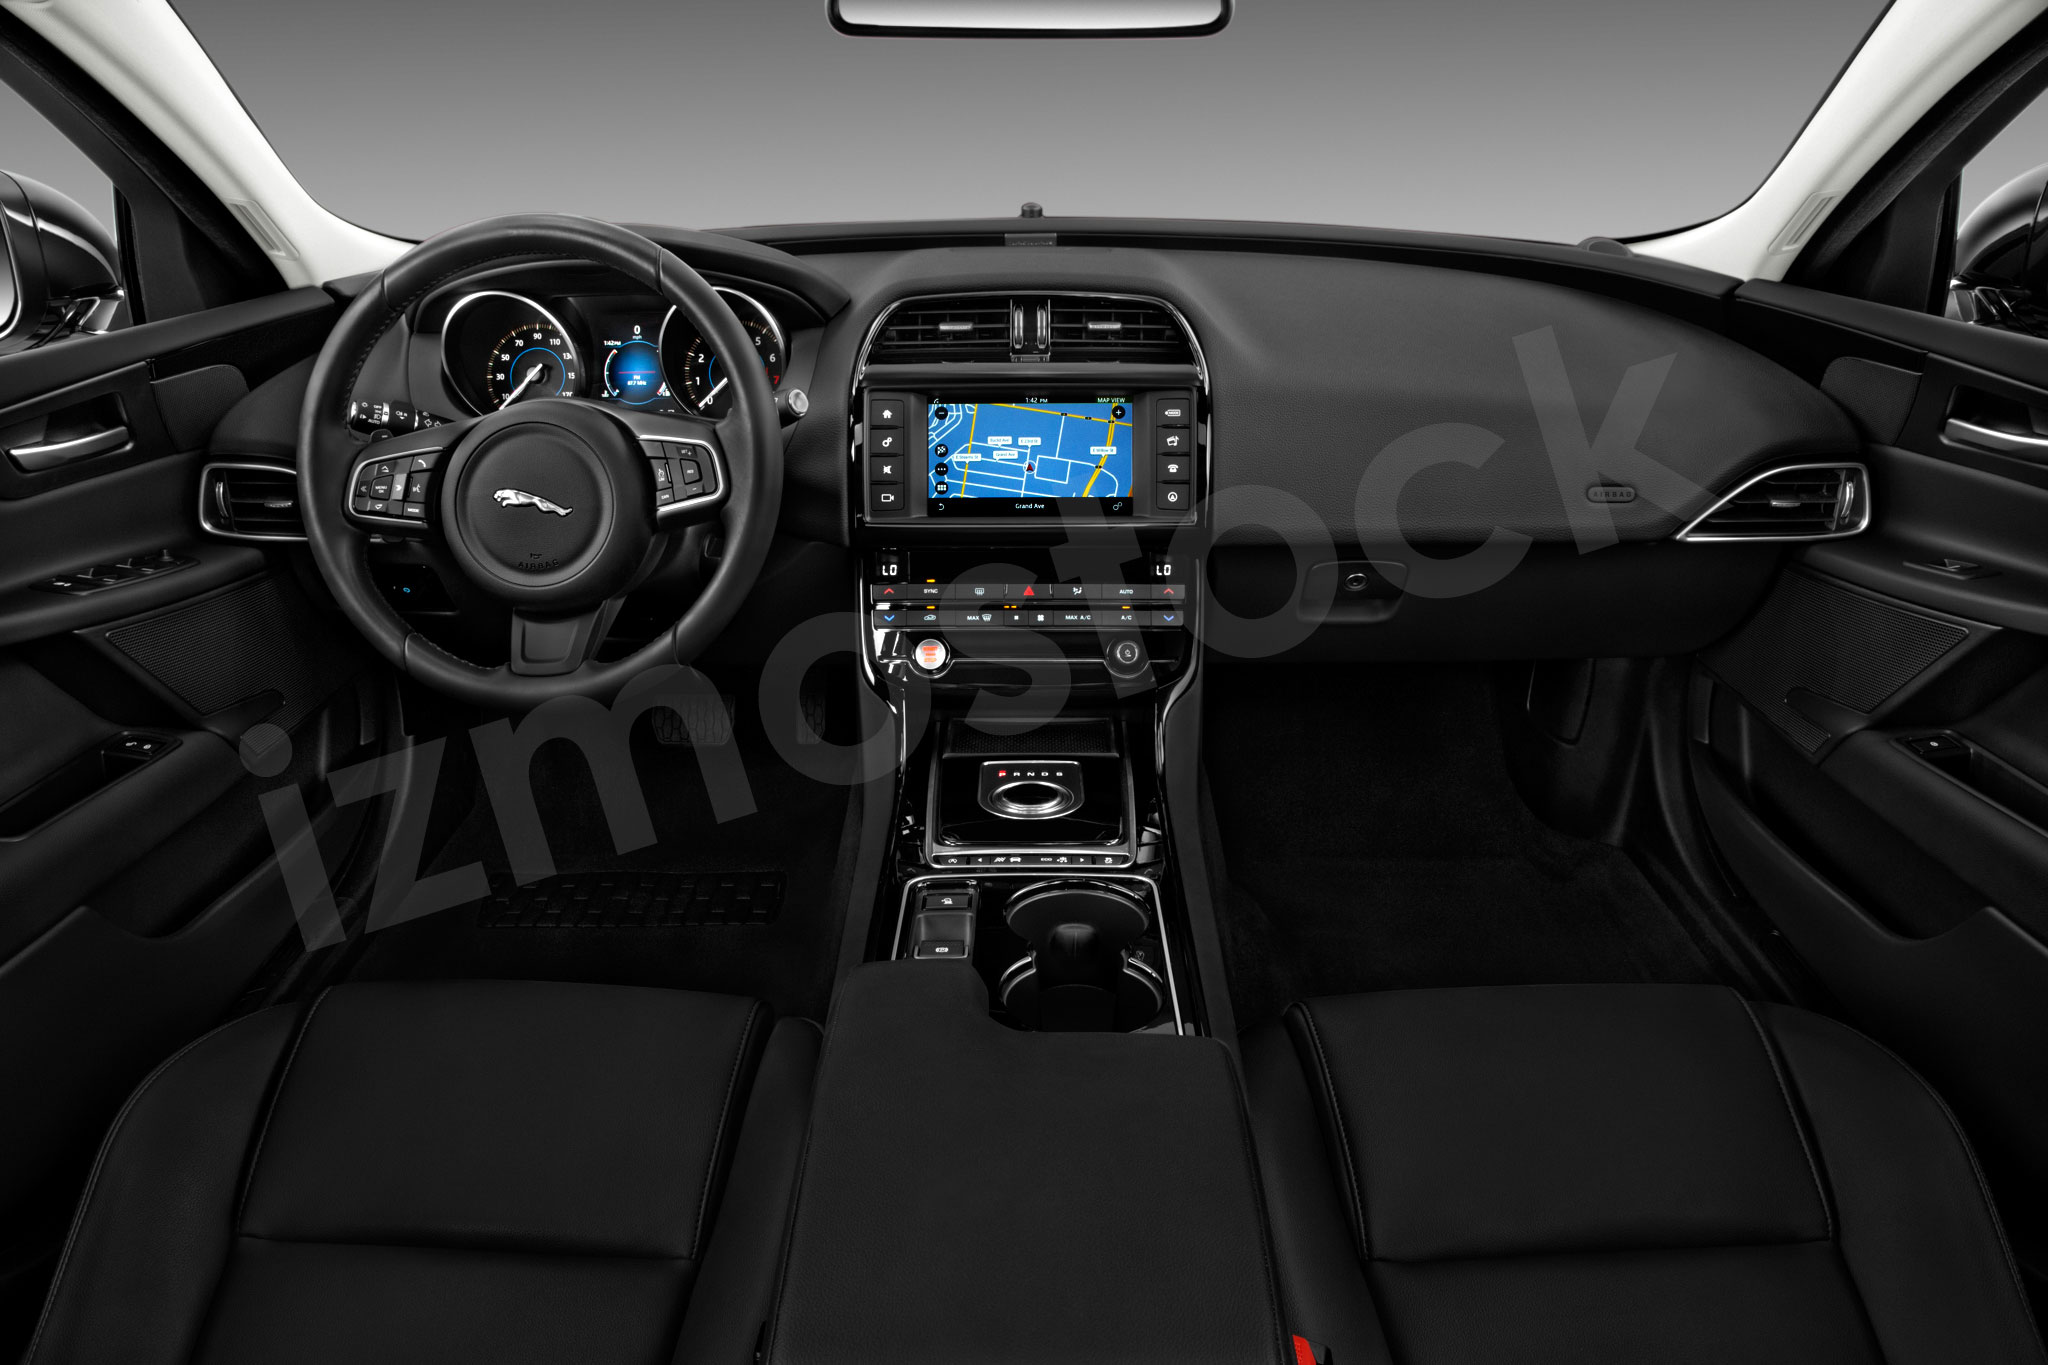 2017 Jaguar Xe Review Photos Price Interior Video And Specs